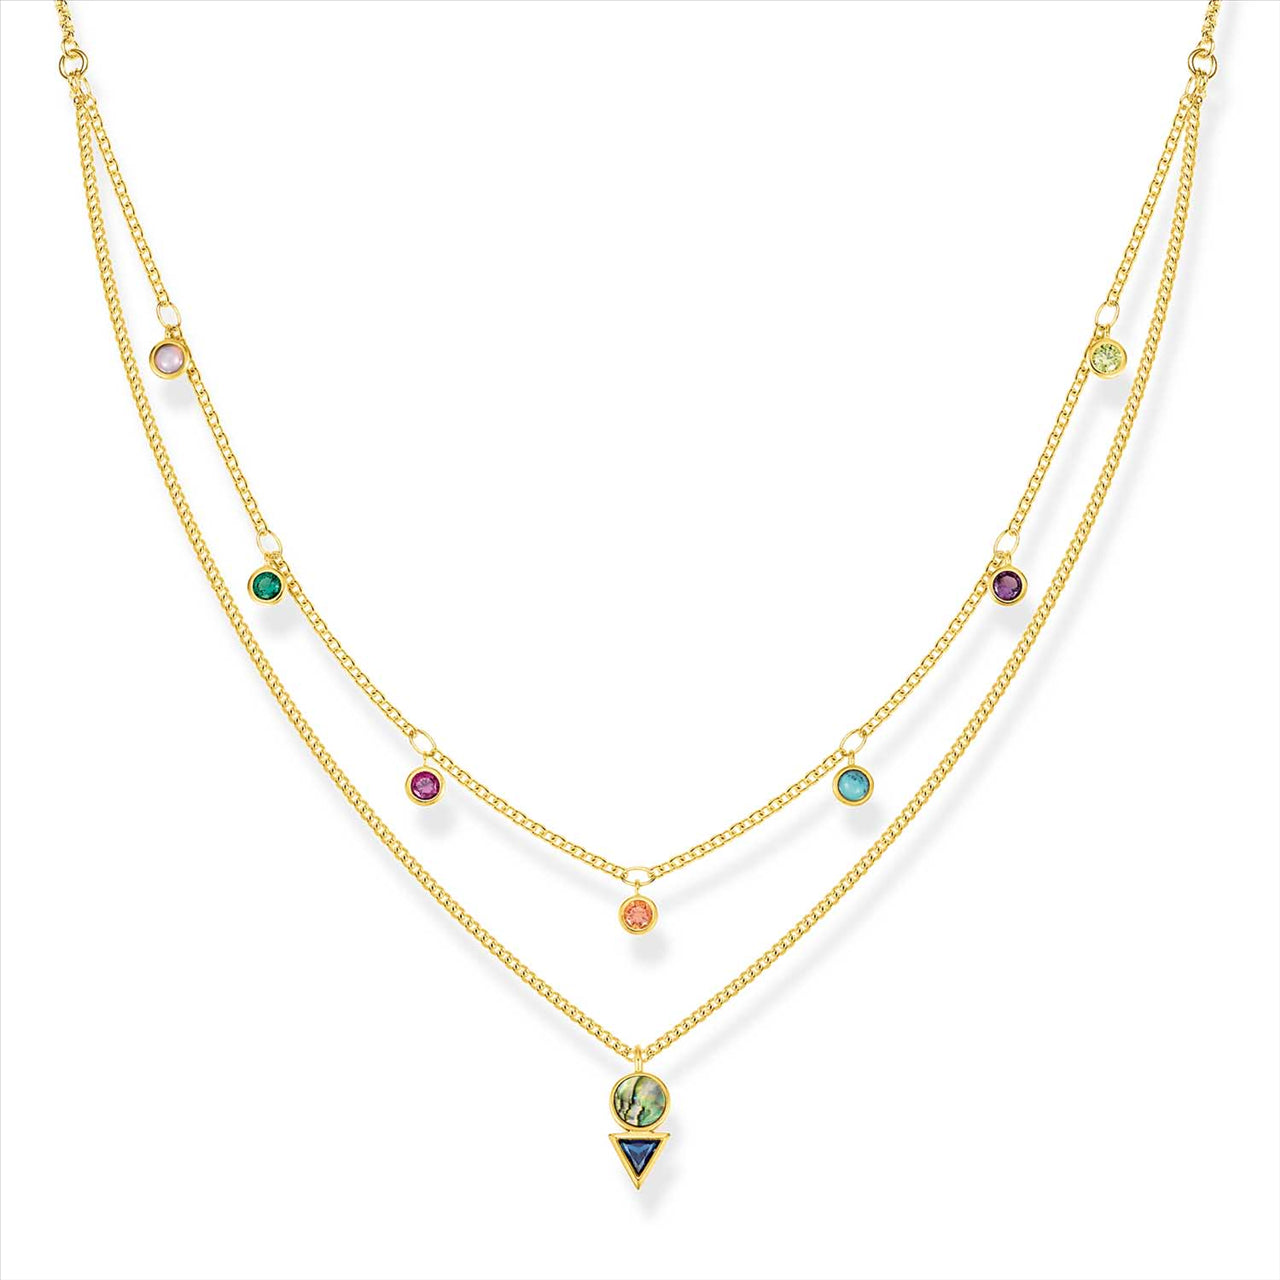 Thomas Sabo Necklace "Colourful Stones" 40/42.5/45cm